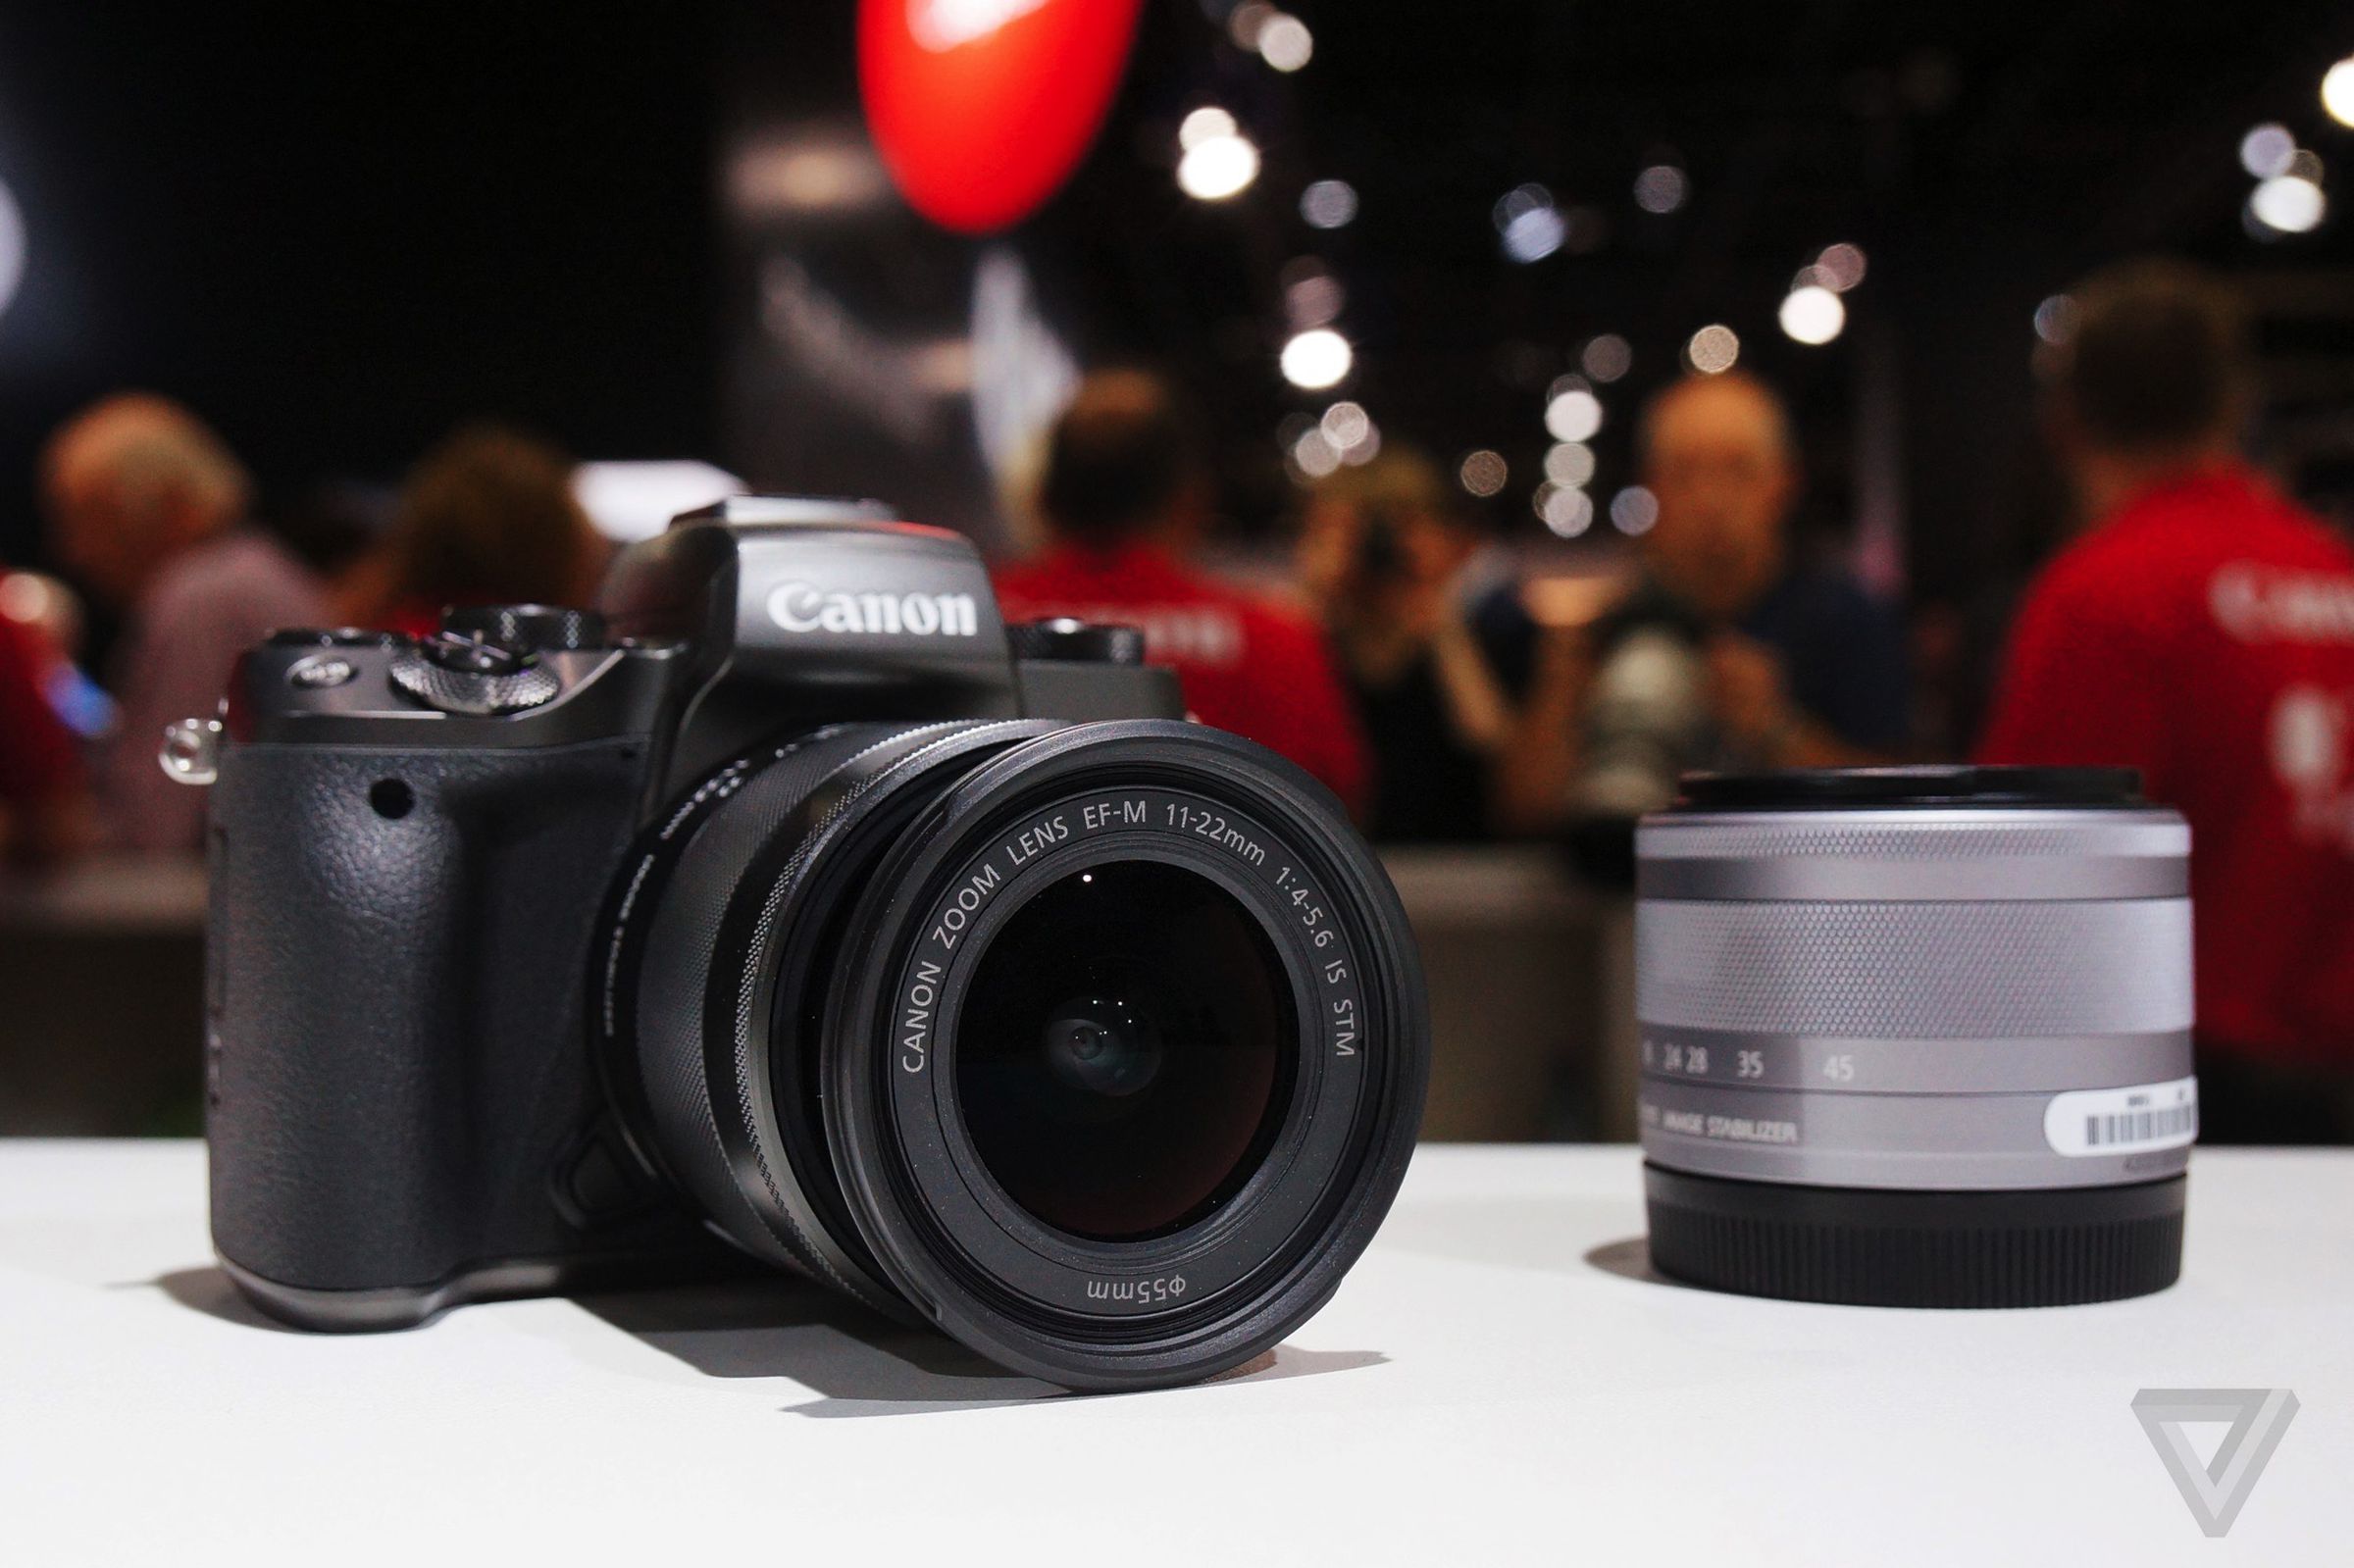 Canon M5 hands-on photos from Photokina 2016